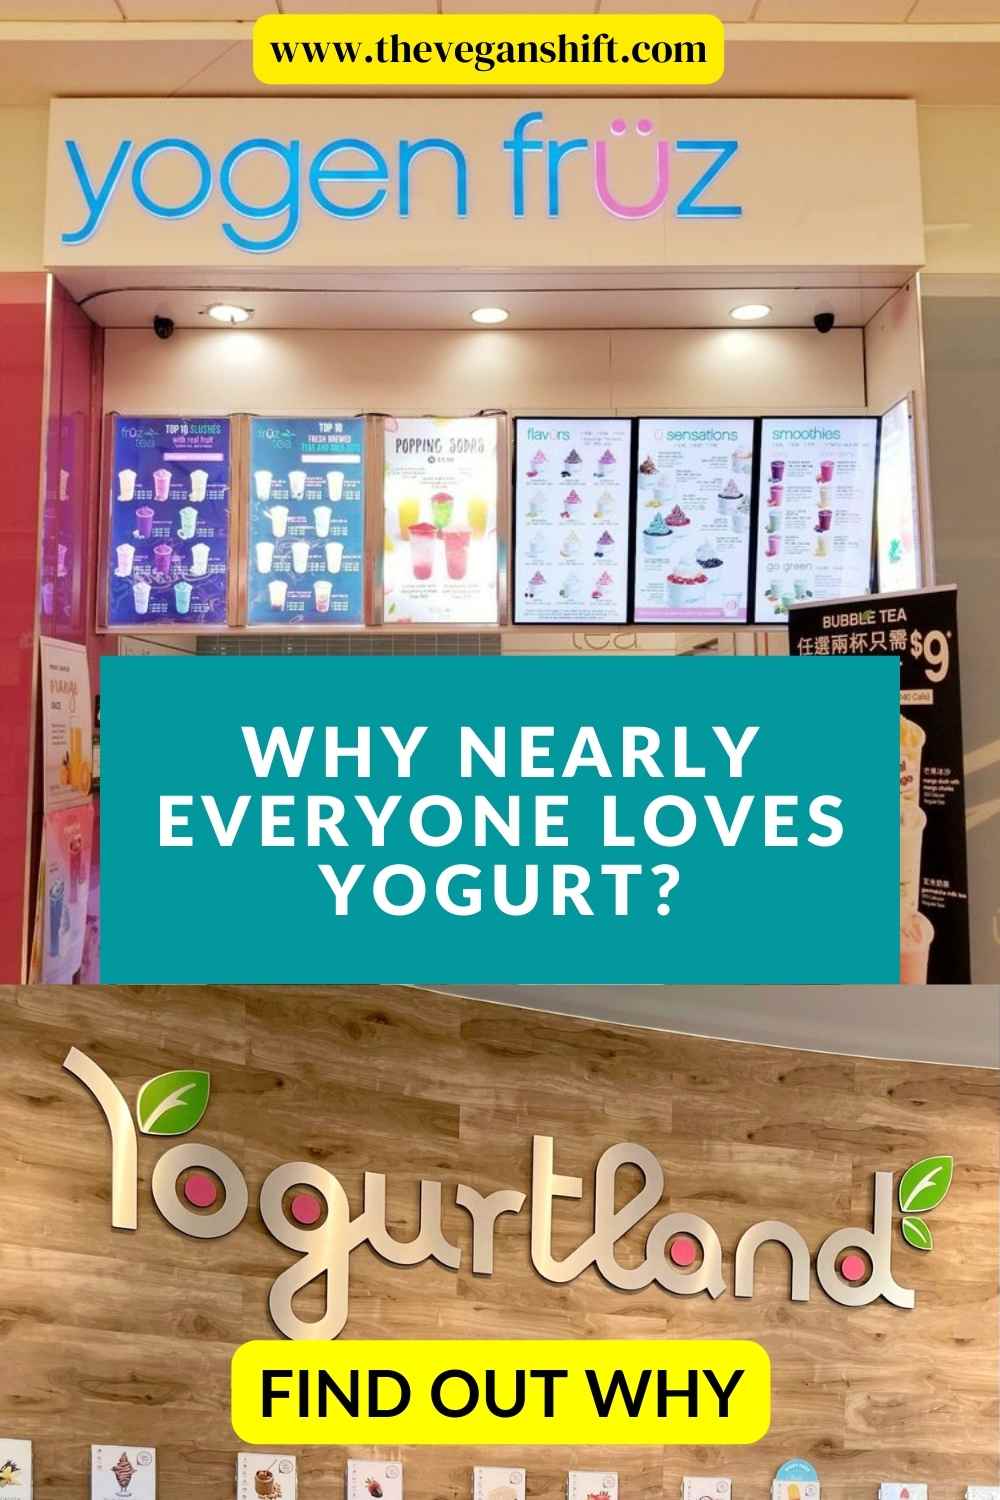 Why the whole world loves yogurt?